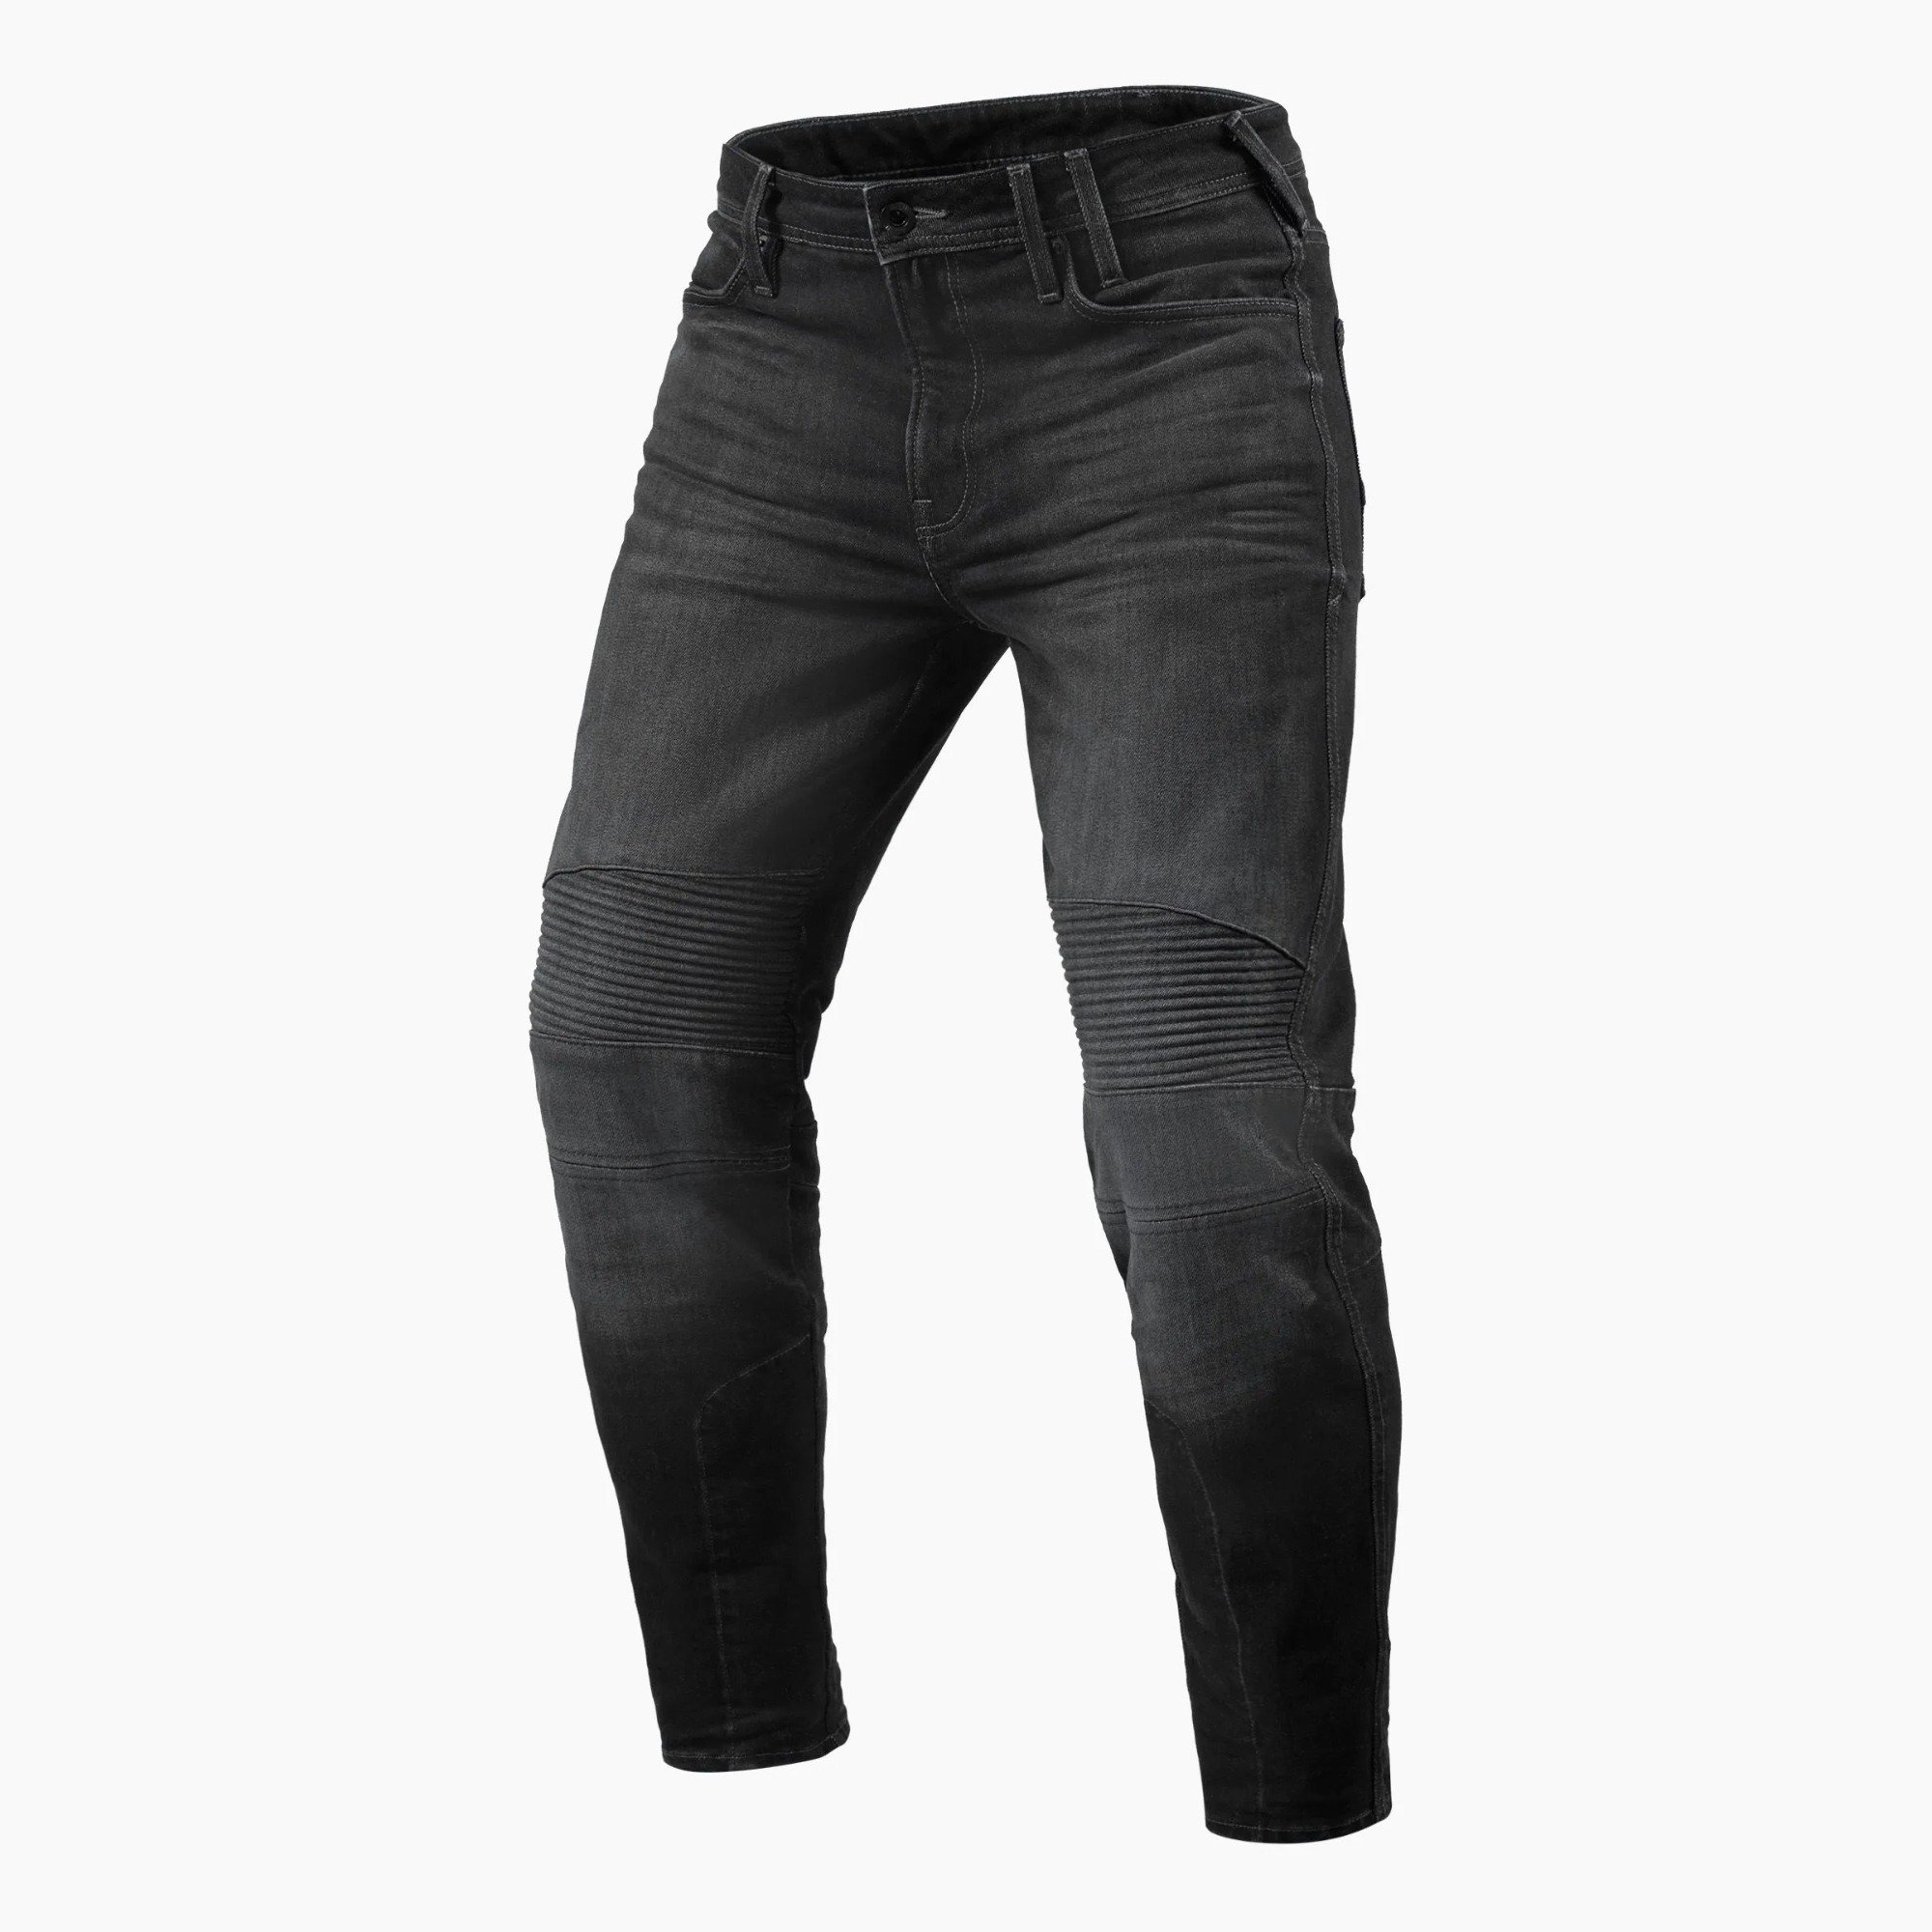 Image of REV'IT! Jeans Moto 2 TF Dark Grey Used Motorcycle Jeans Talla L34/W28